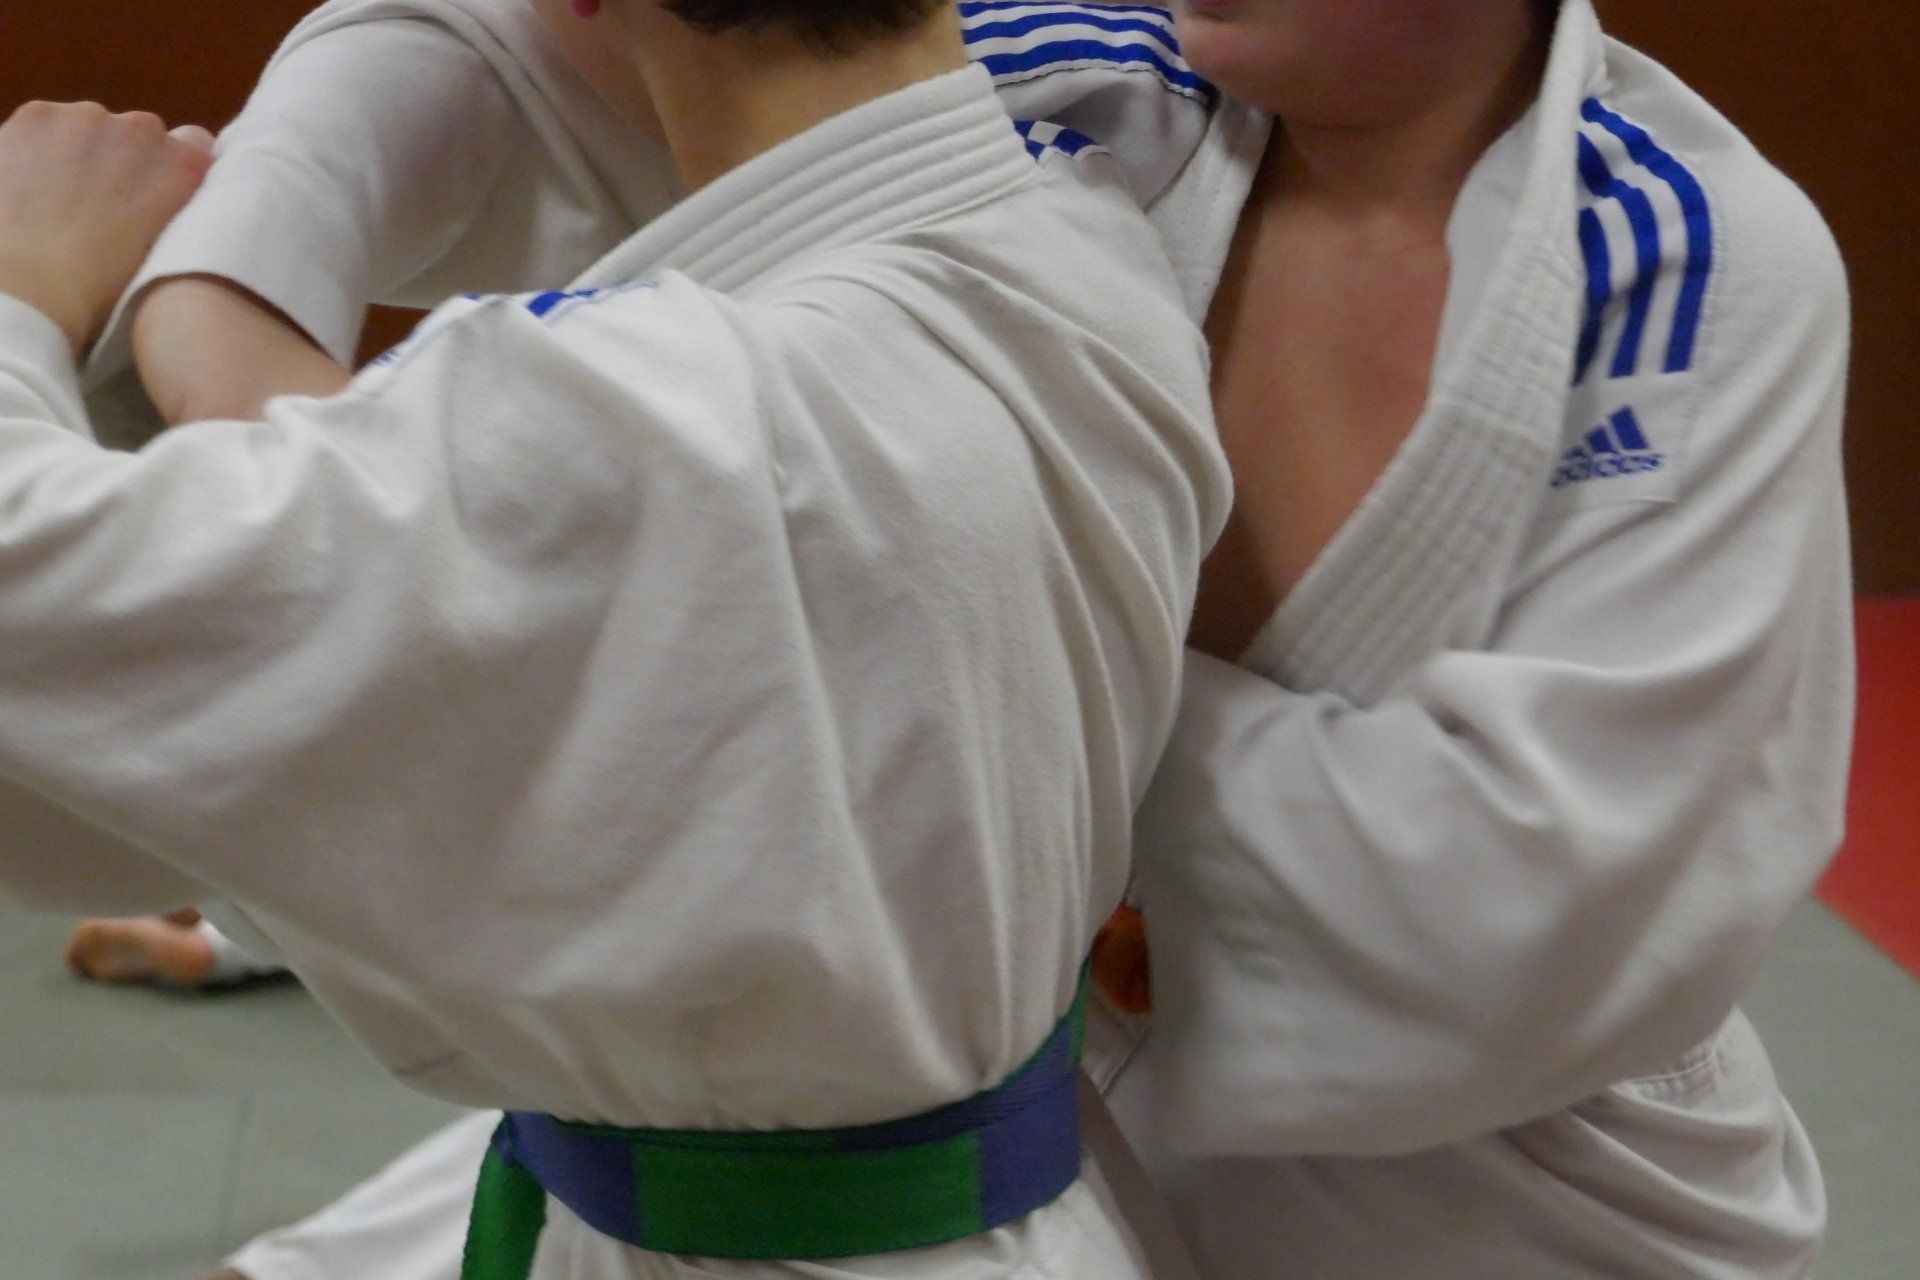 association sportive du mesnil le roi, asmr judo